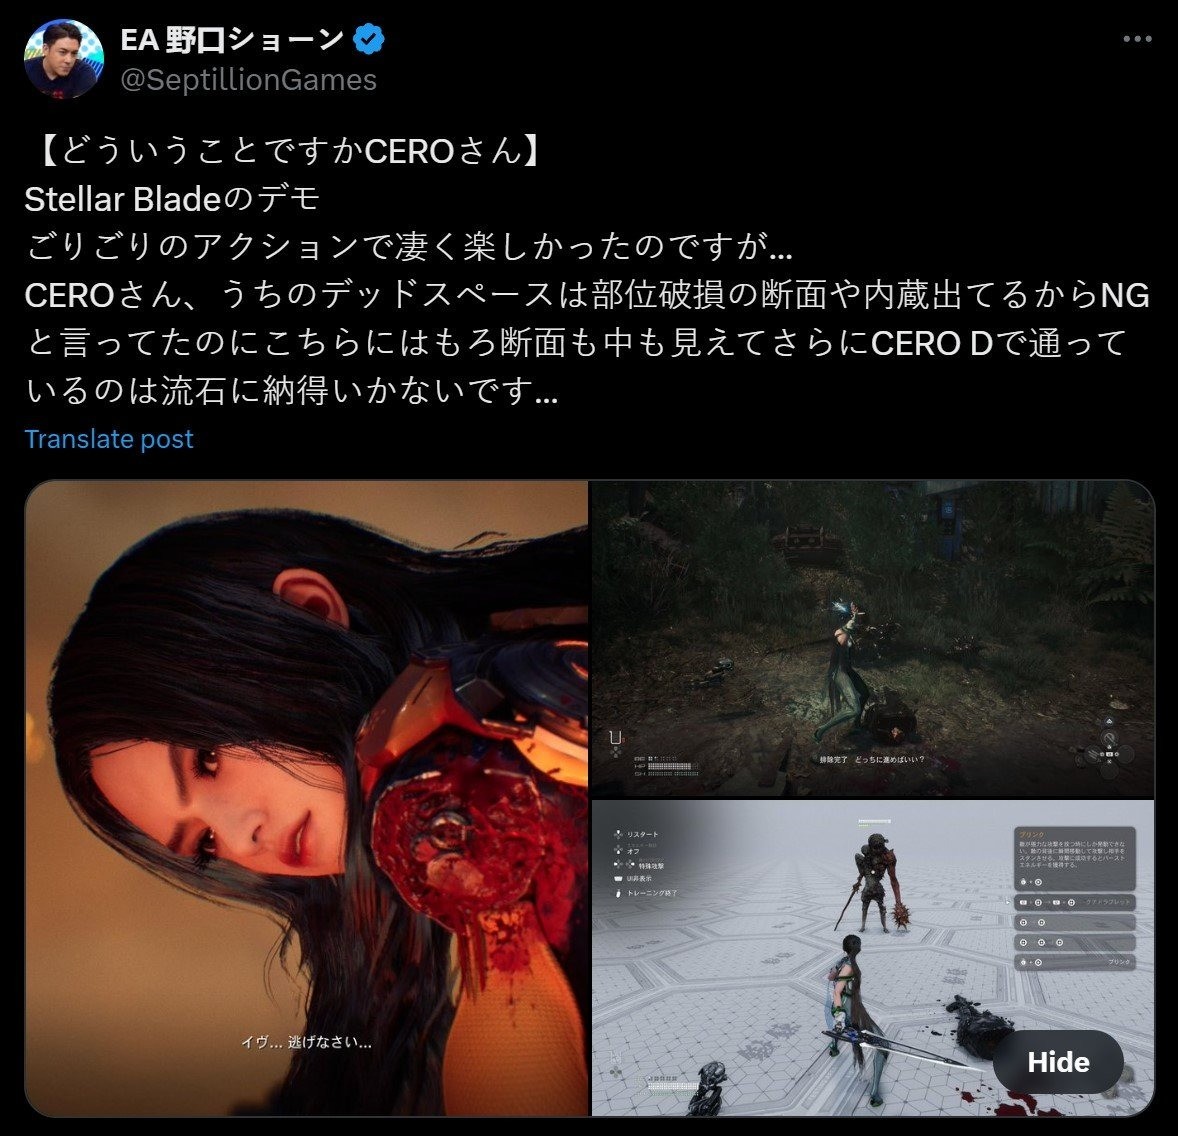 EA批评日本评级组织拒绝《死亡空间》 却给《星刃》开绿灯-2Q博客